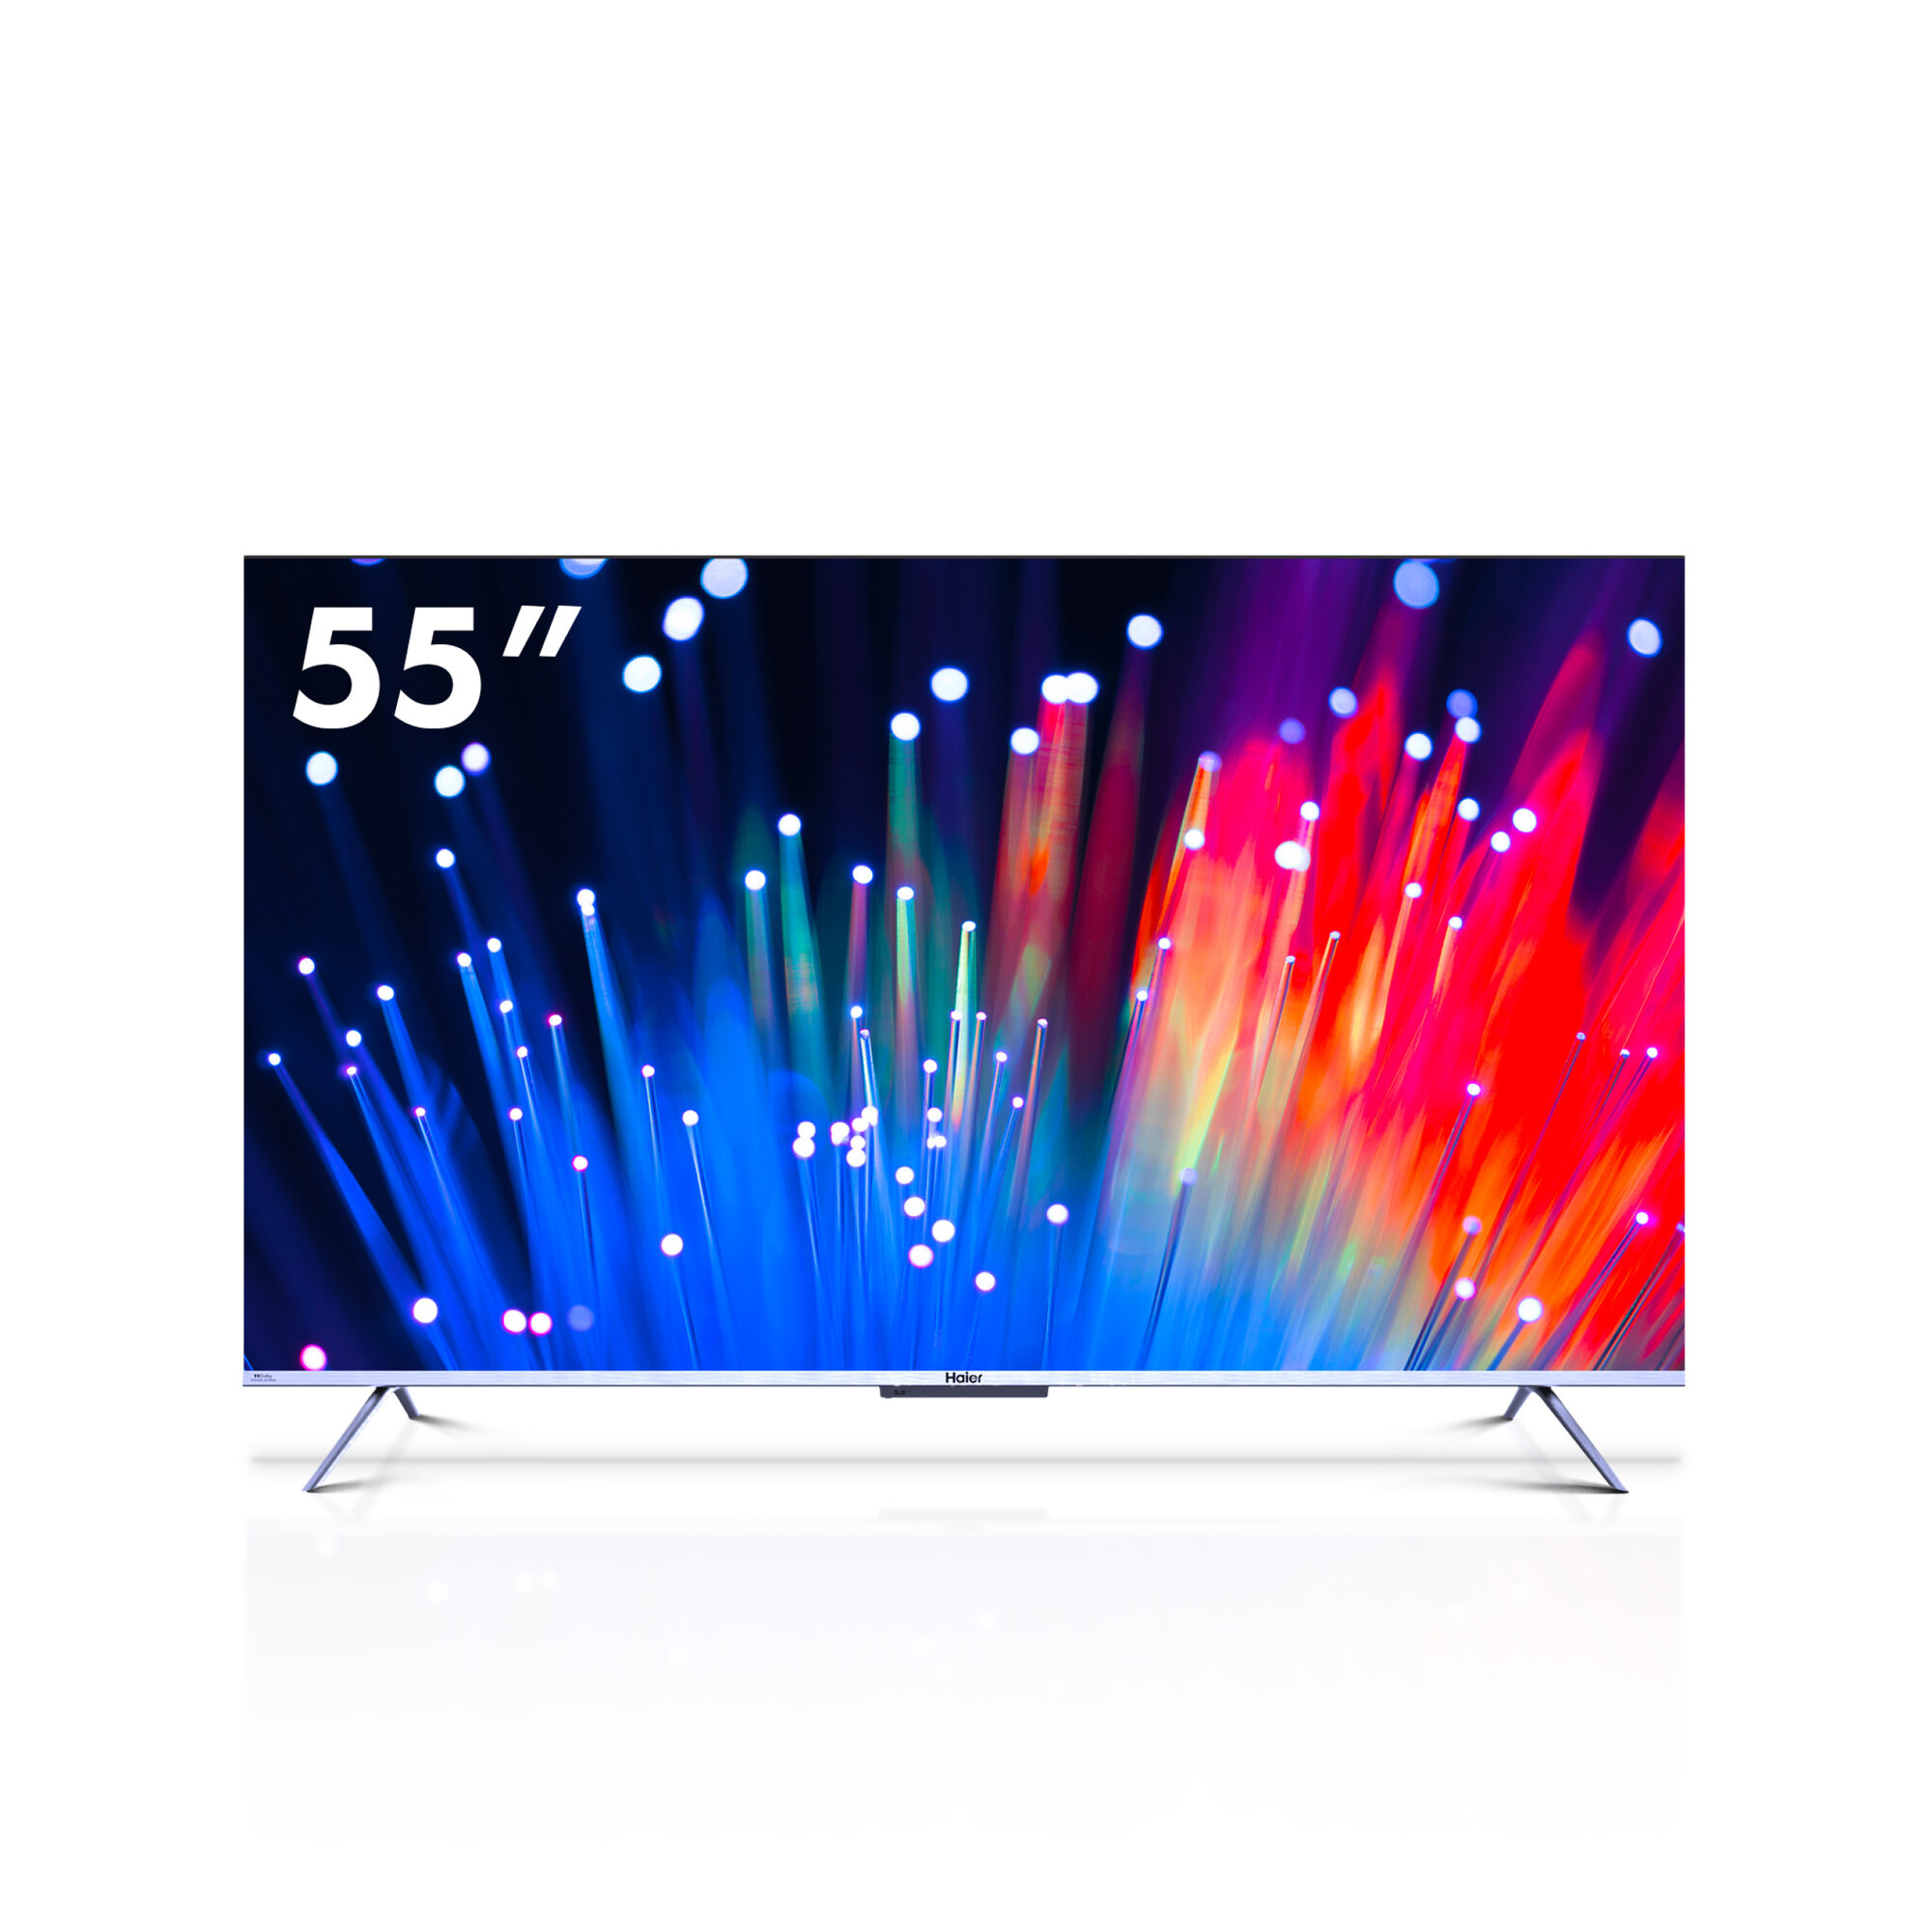 55" Телевизор Haier 55 Smart TV S3 RU, серый